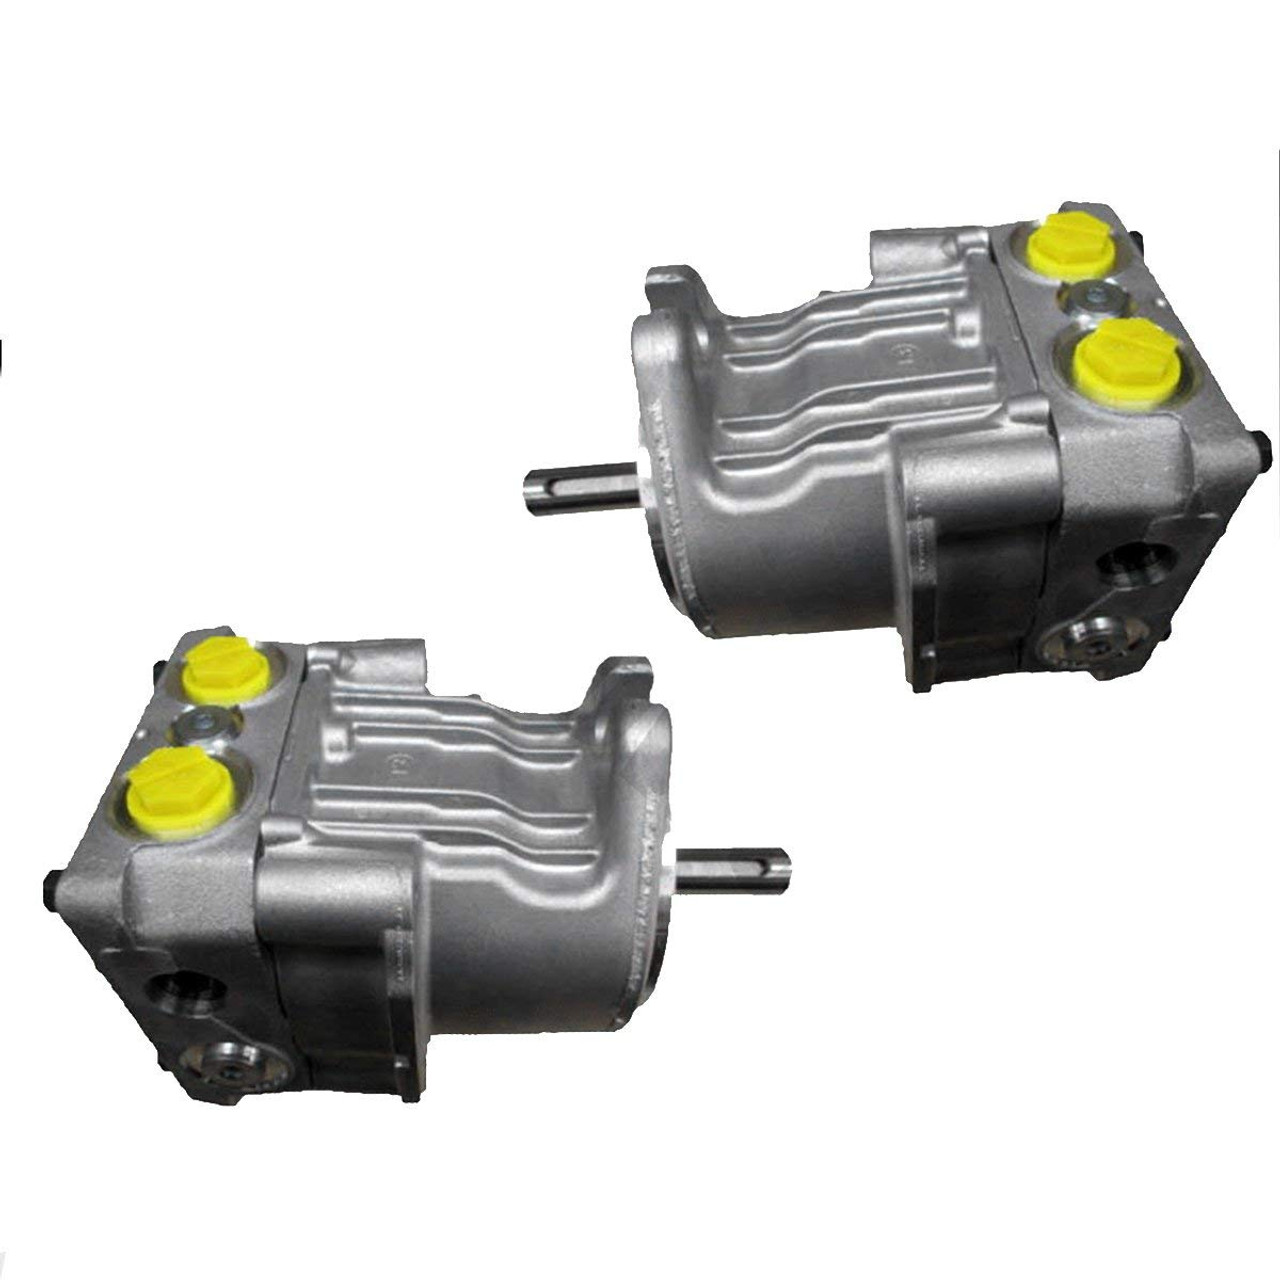 Hydro Gear Pump (Right & Left) Kit 10cc Scag SWZ Lawn Mowers & Others / PG-1JQQ-DY1X-XXXX, PG-1GQQ-DY1X-XXXX